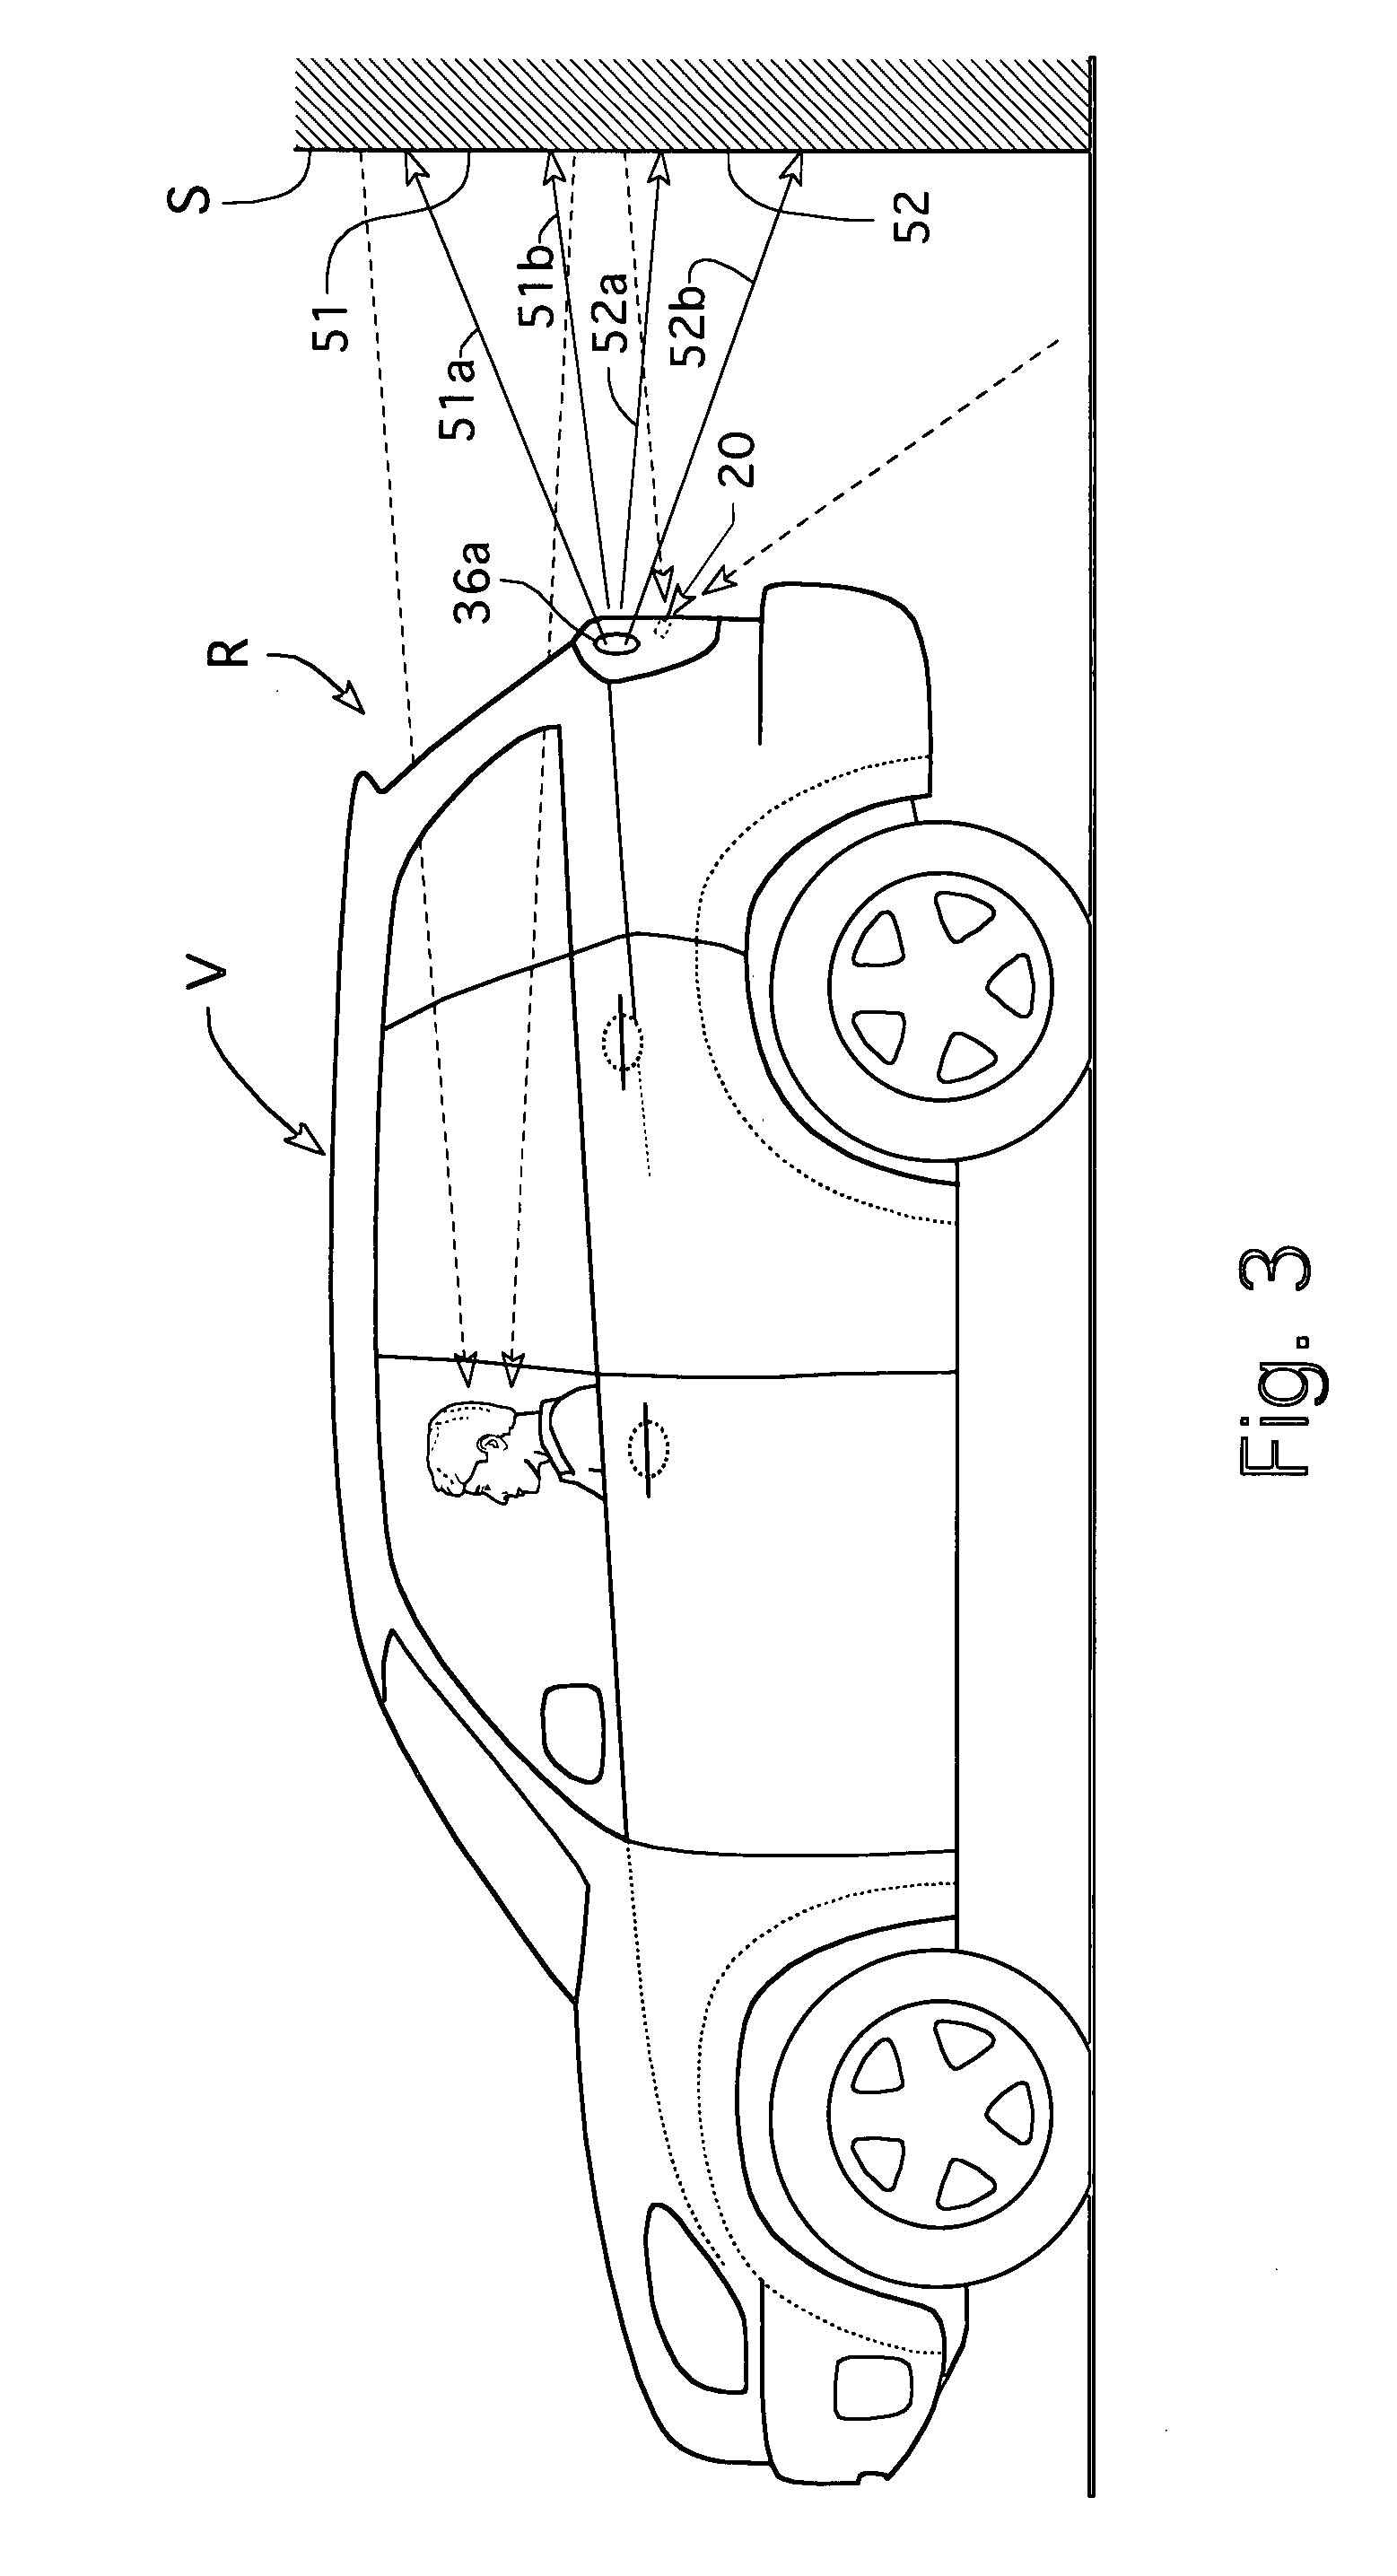 Vehicle parking apparatus